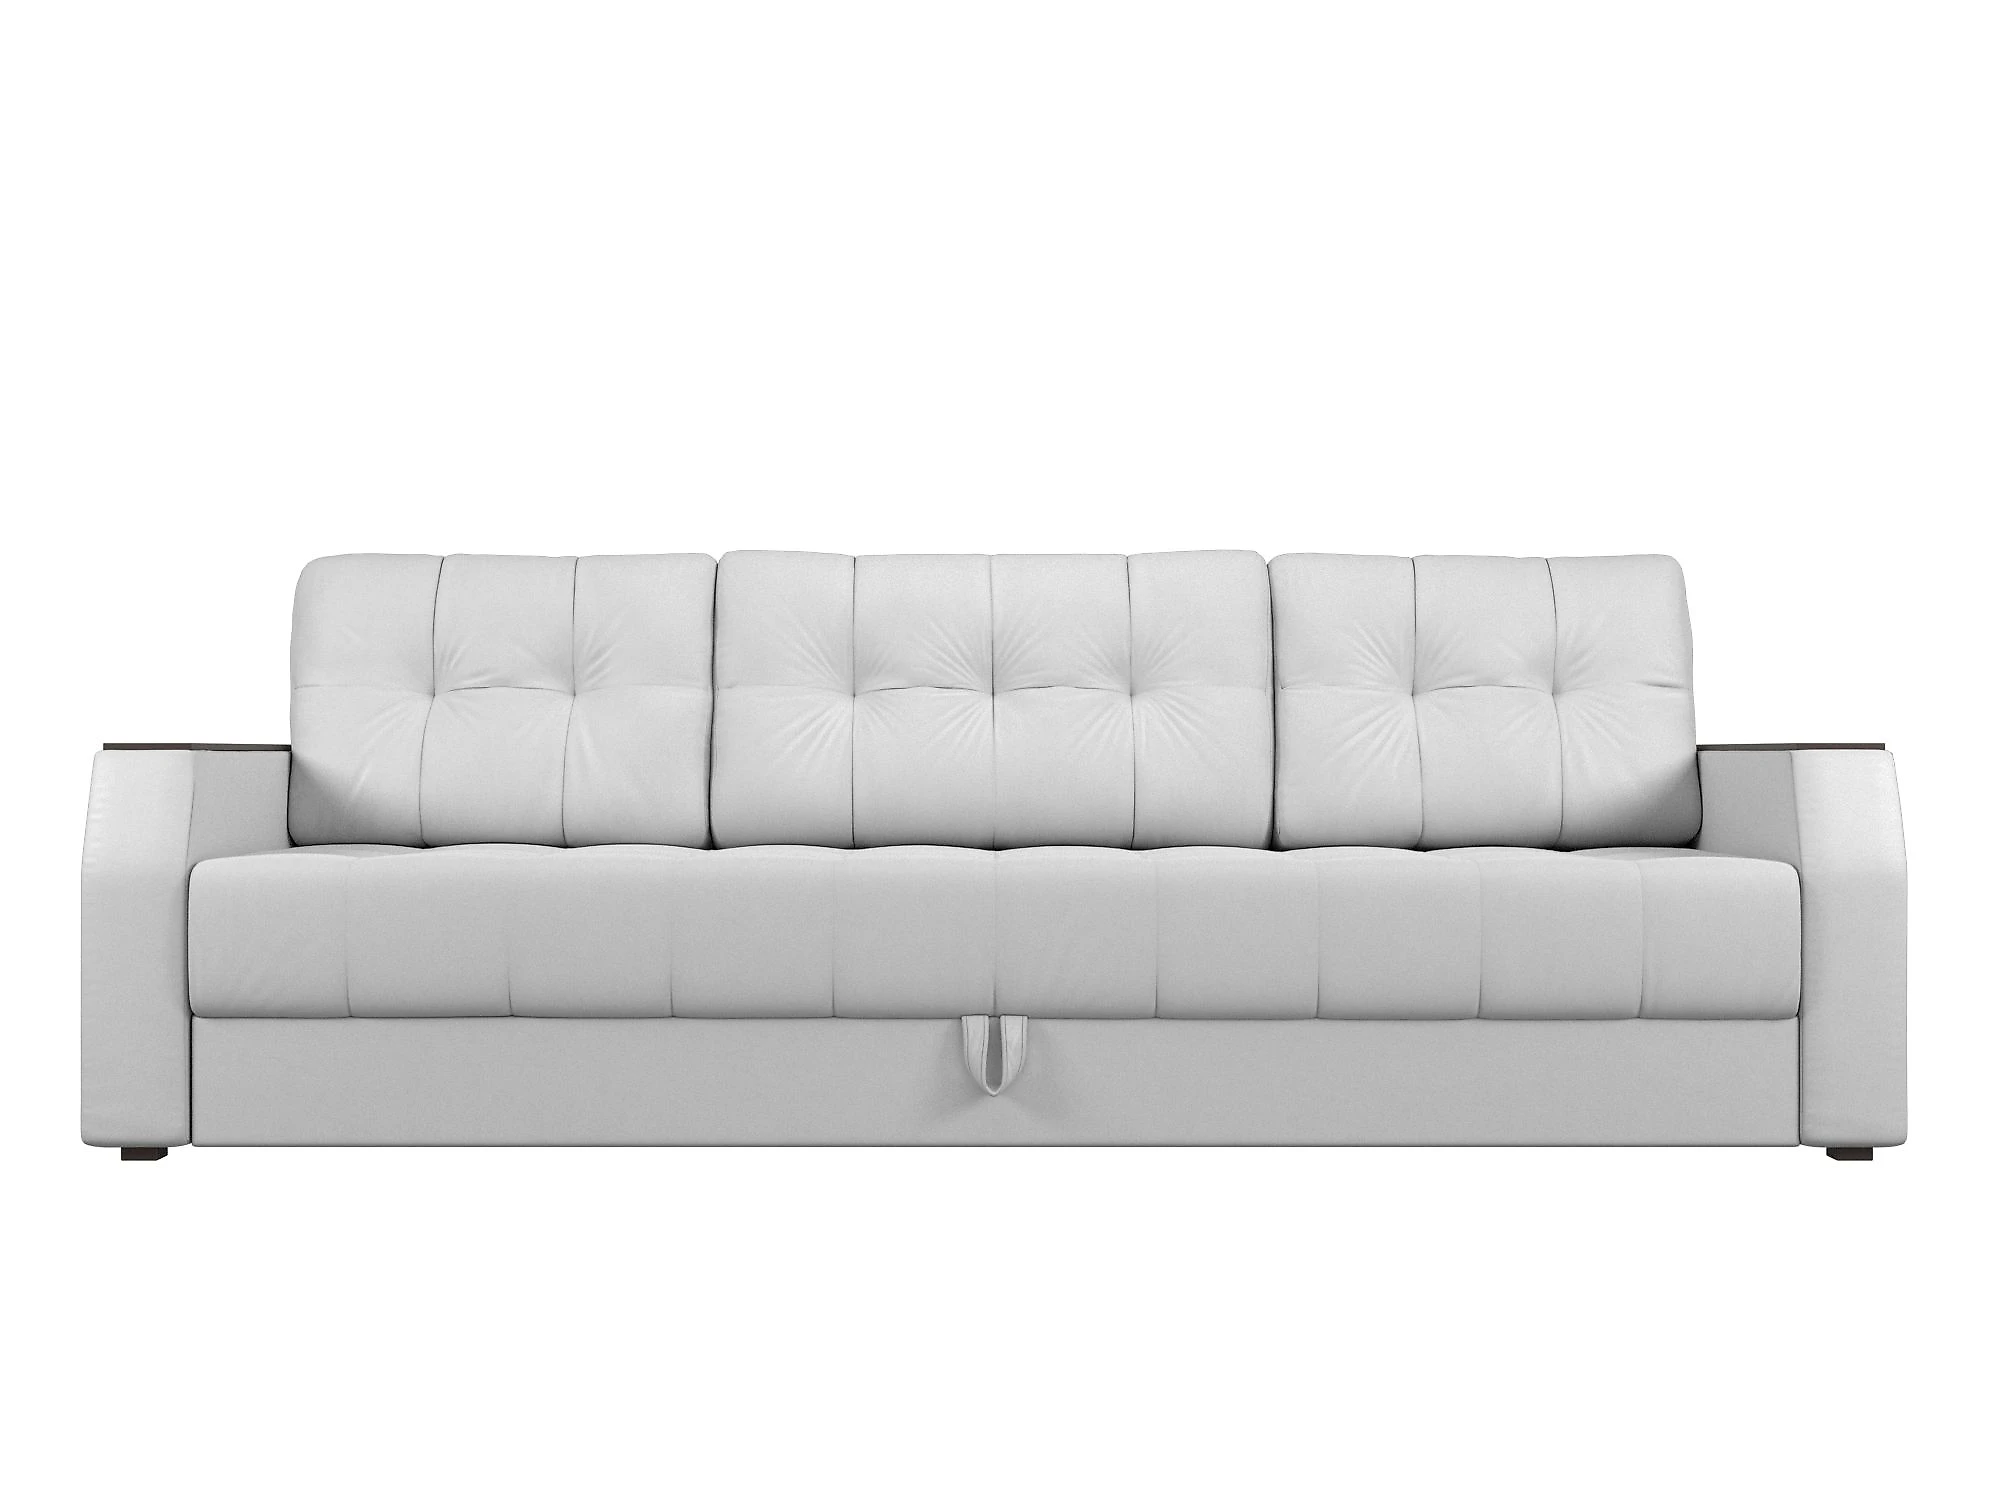  кожаный диван еврокнижка Атлантида без стола Дизайн 15